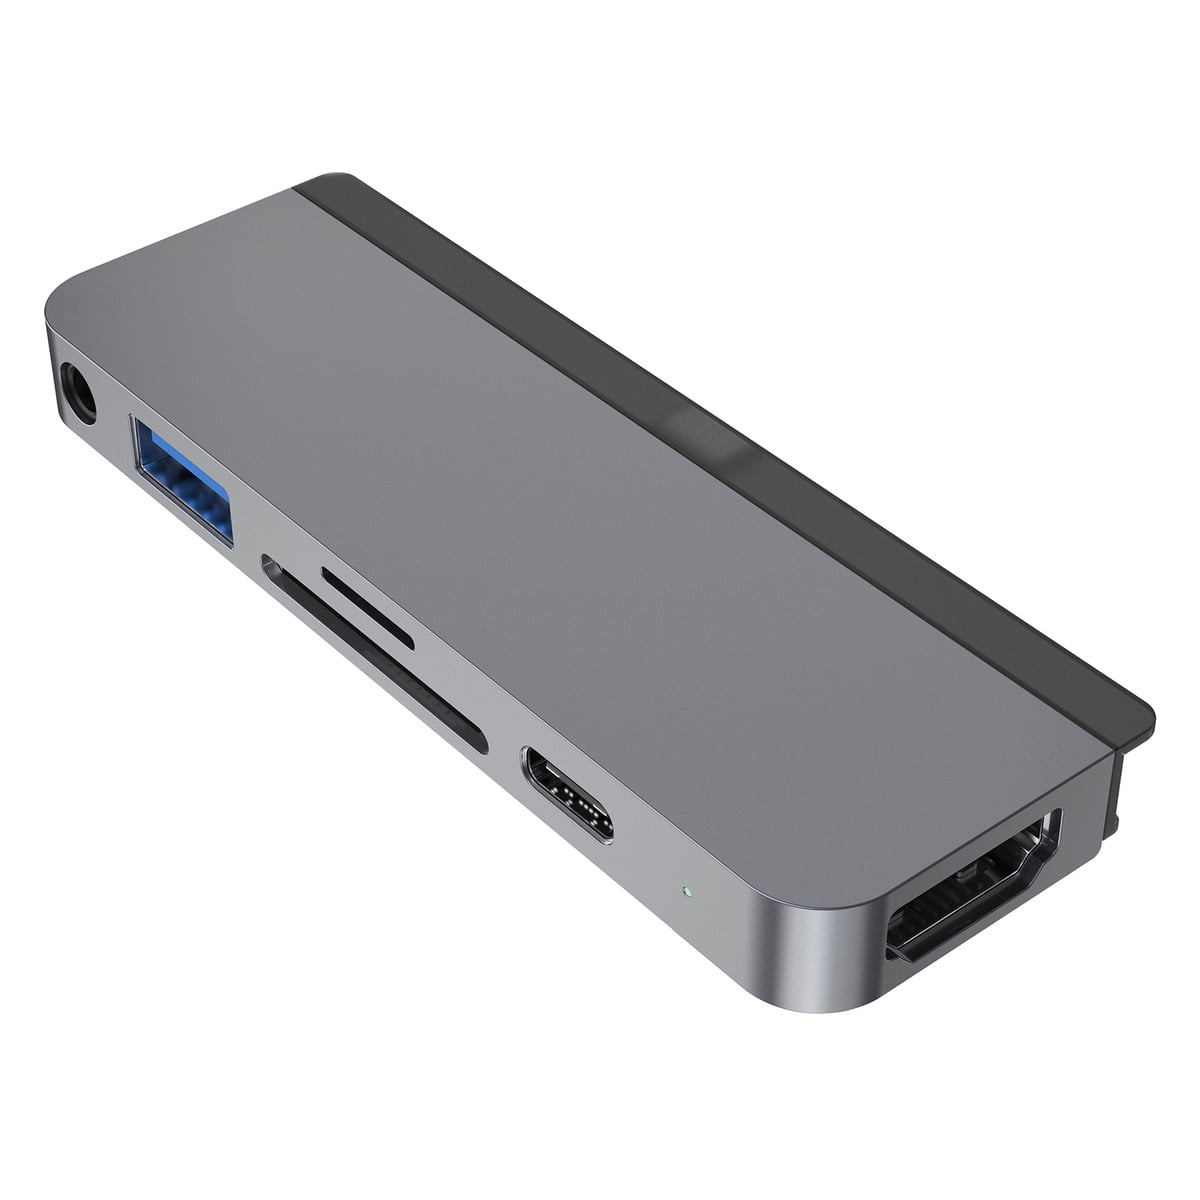 6-in-1 USB-C Hub for iPad Pro/Air, Gray - Walmart.com